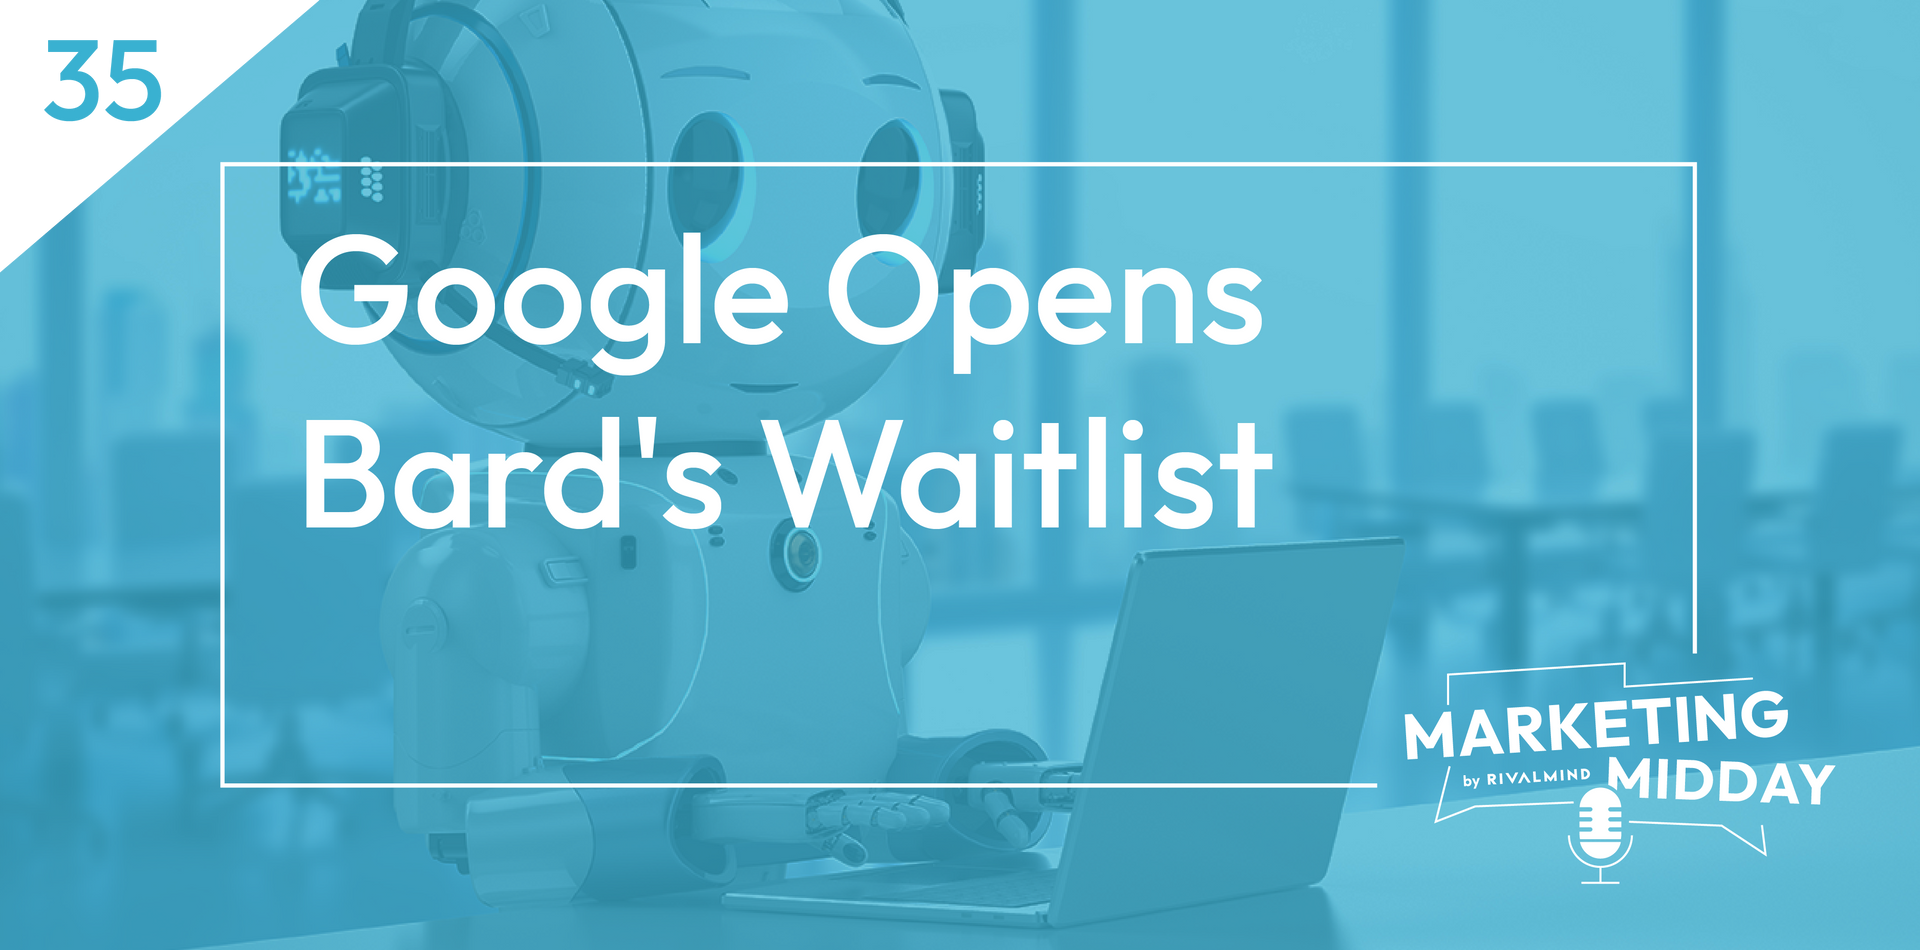 google opens bard's waitlist